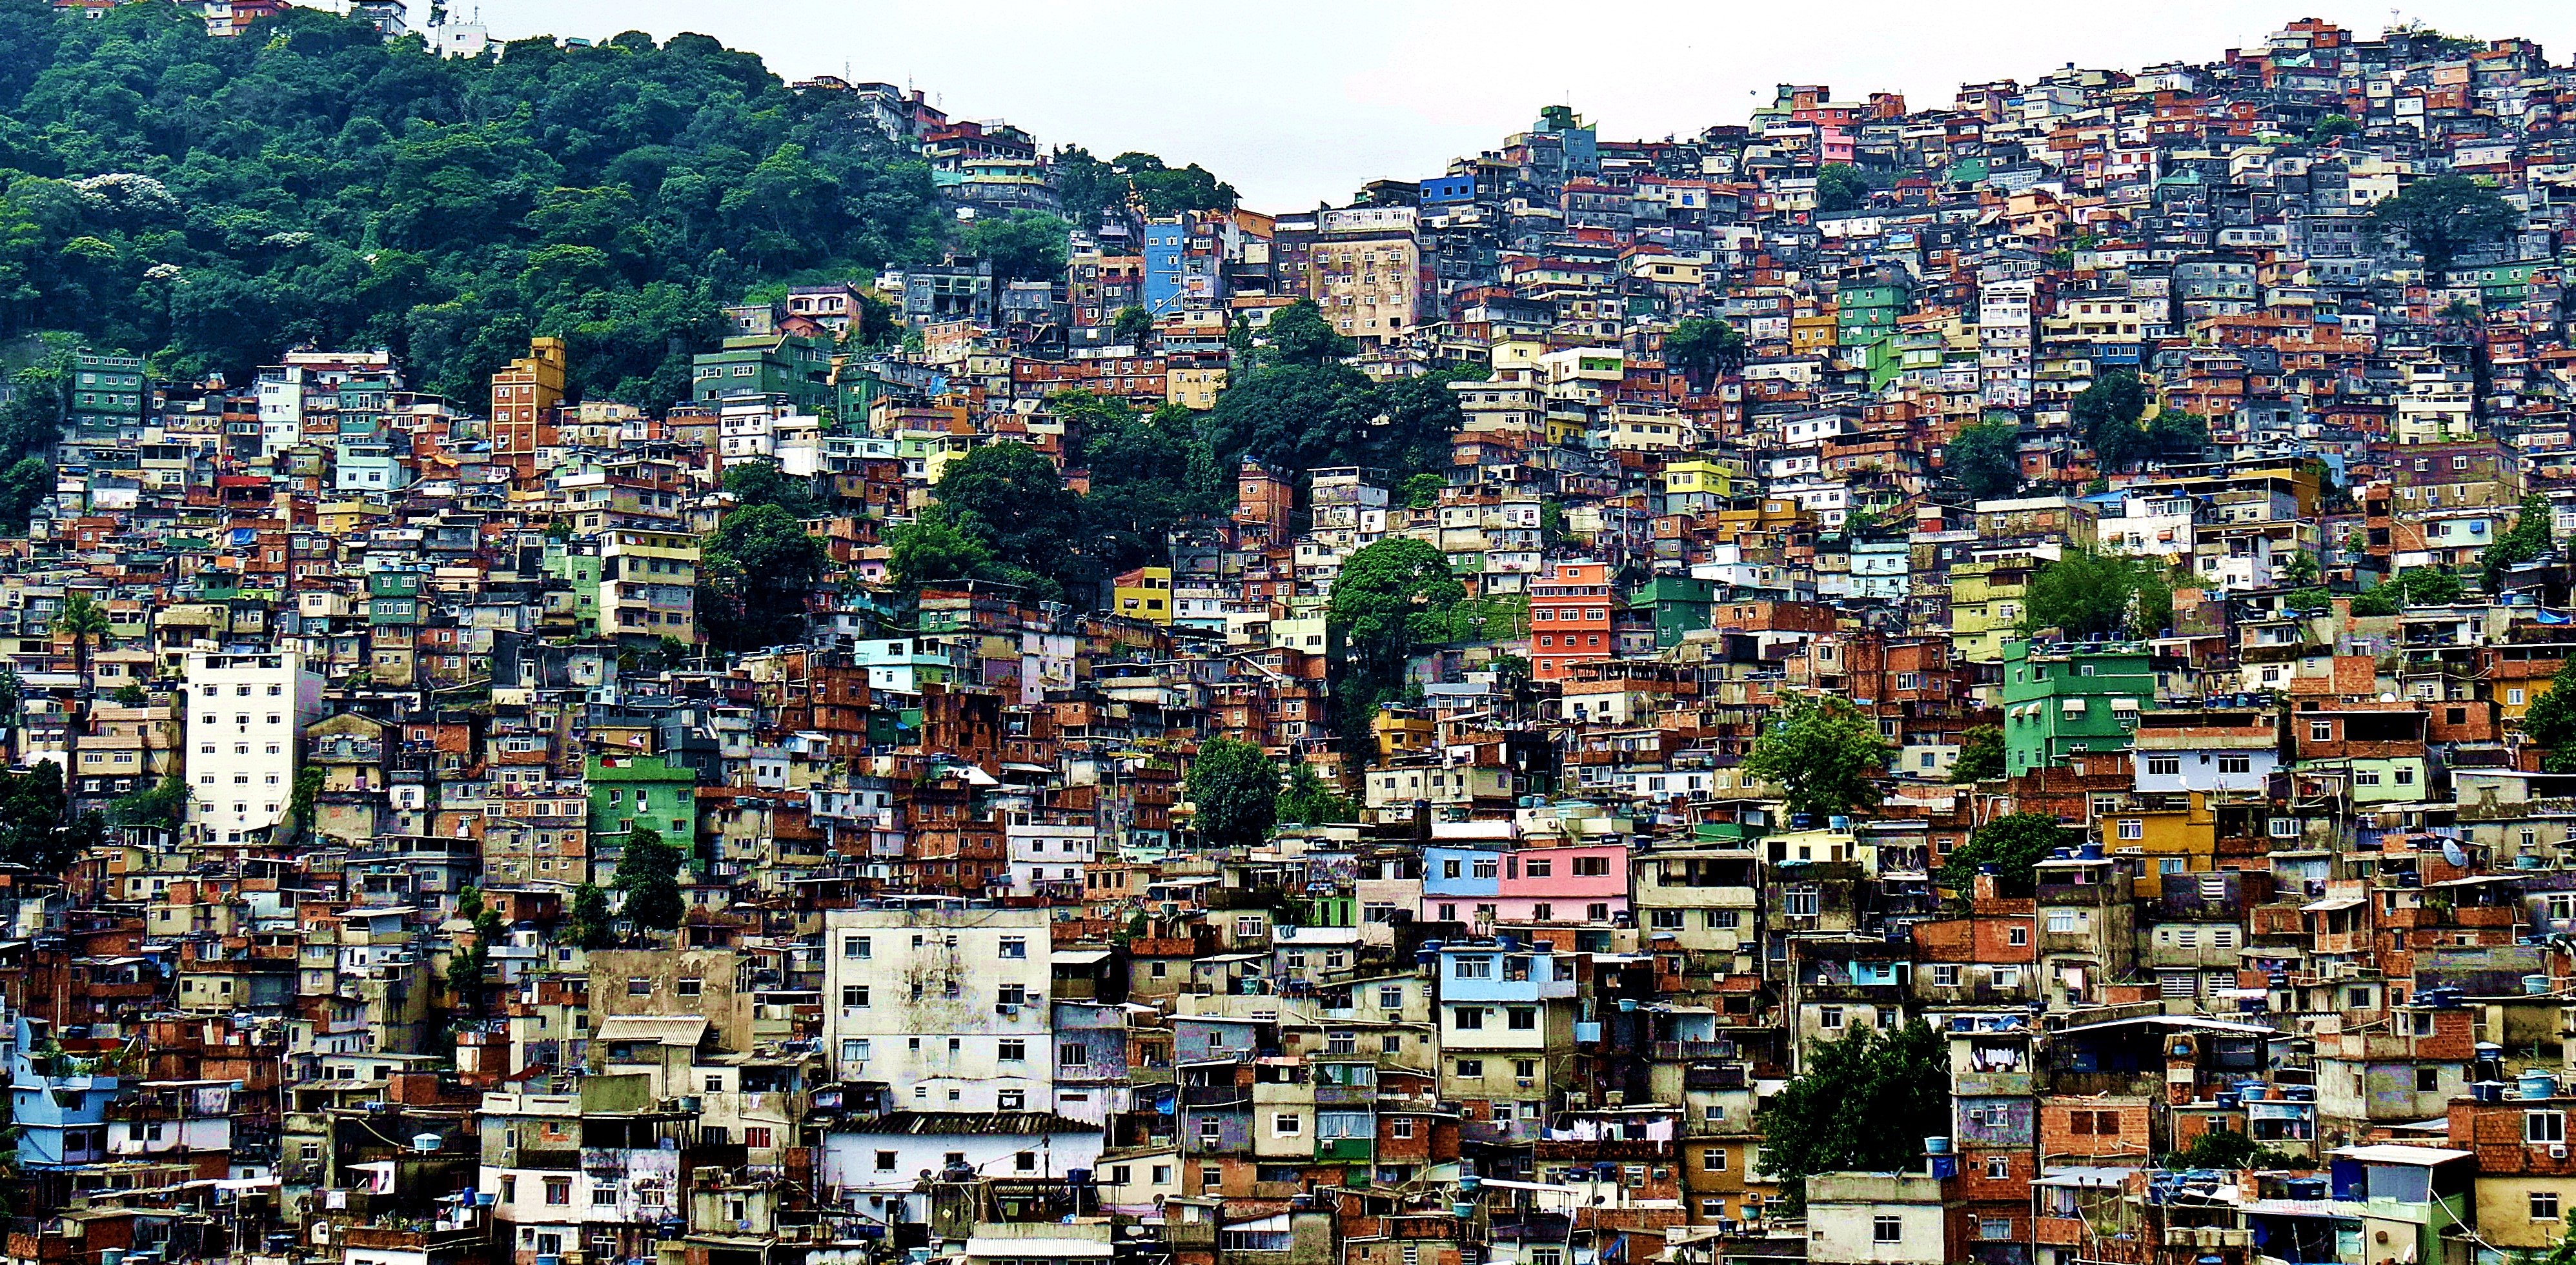 Slums In Favela Brazil Full HD Fond D Cran And Arri Re